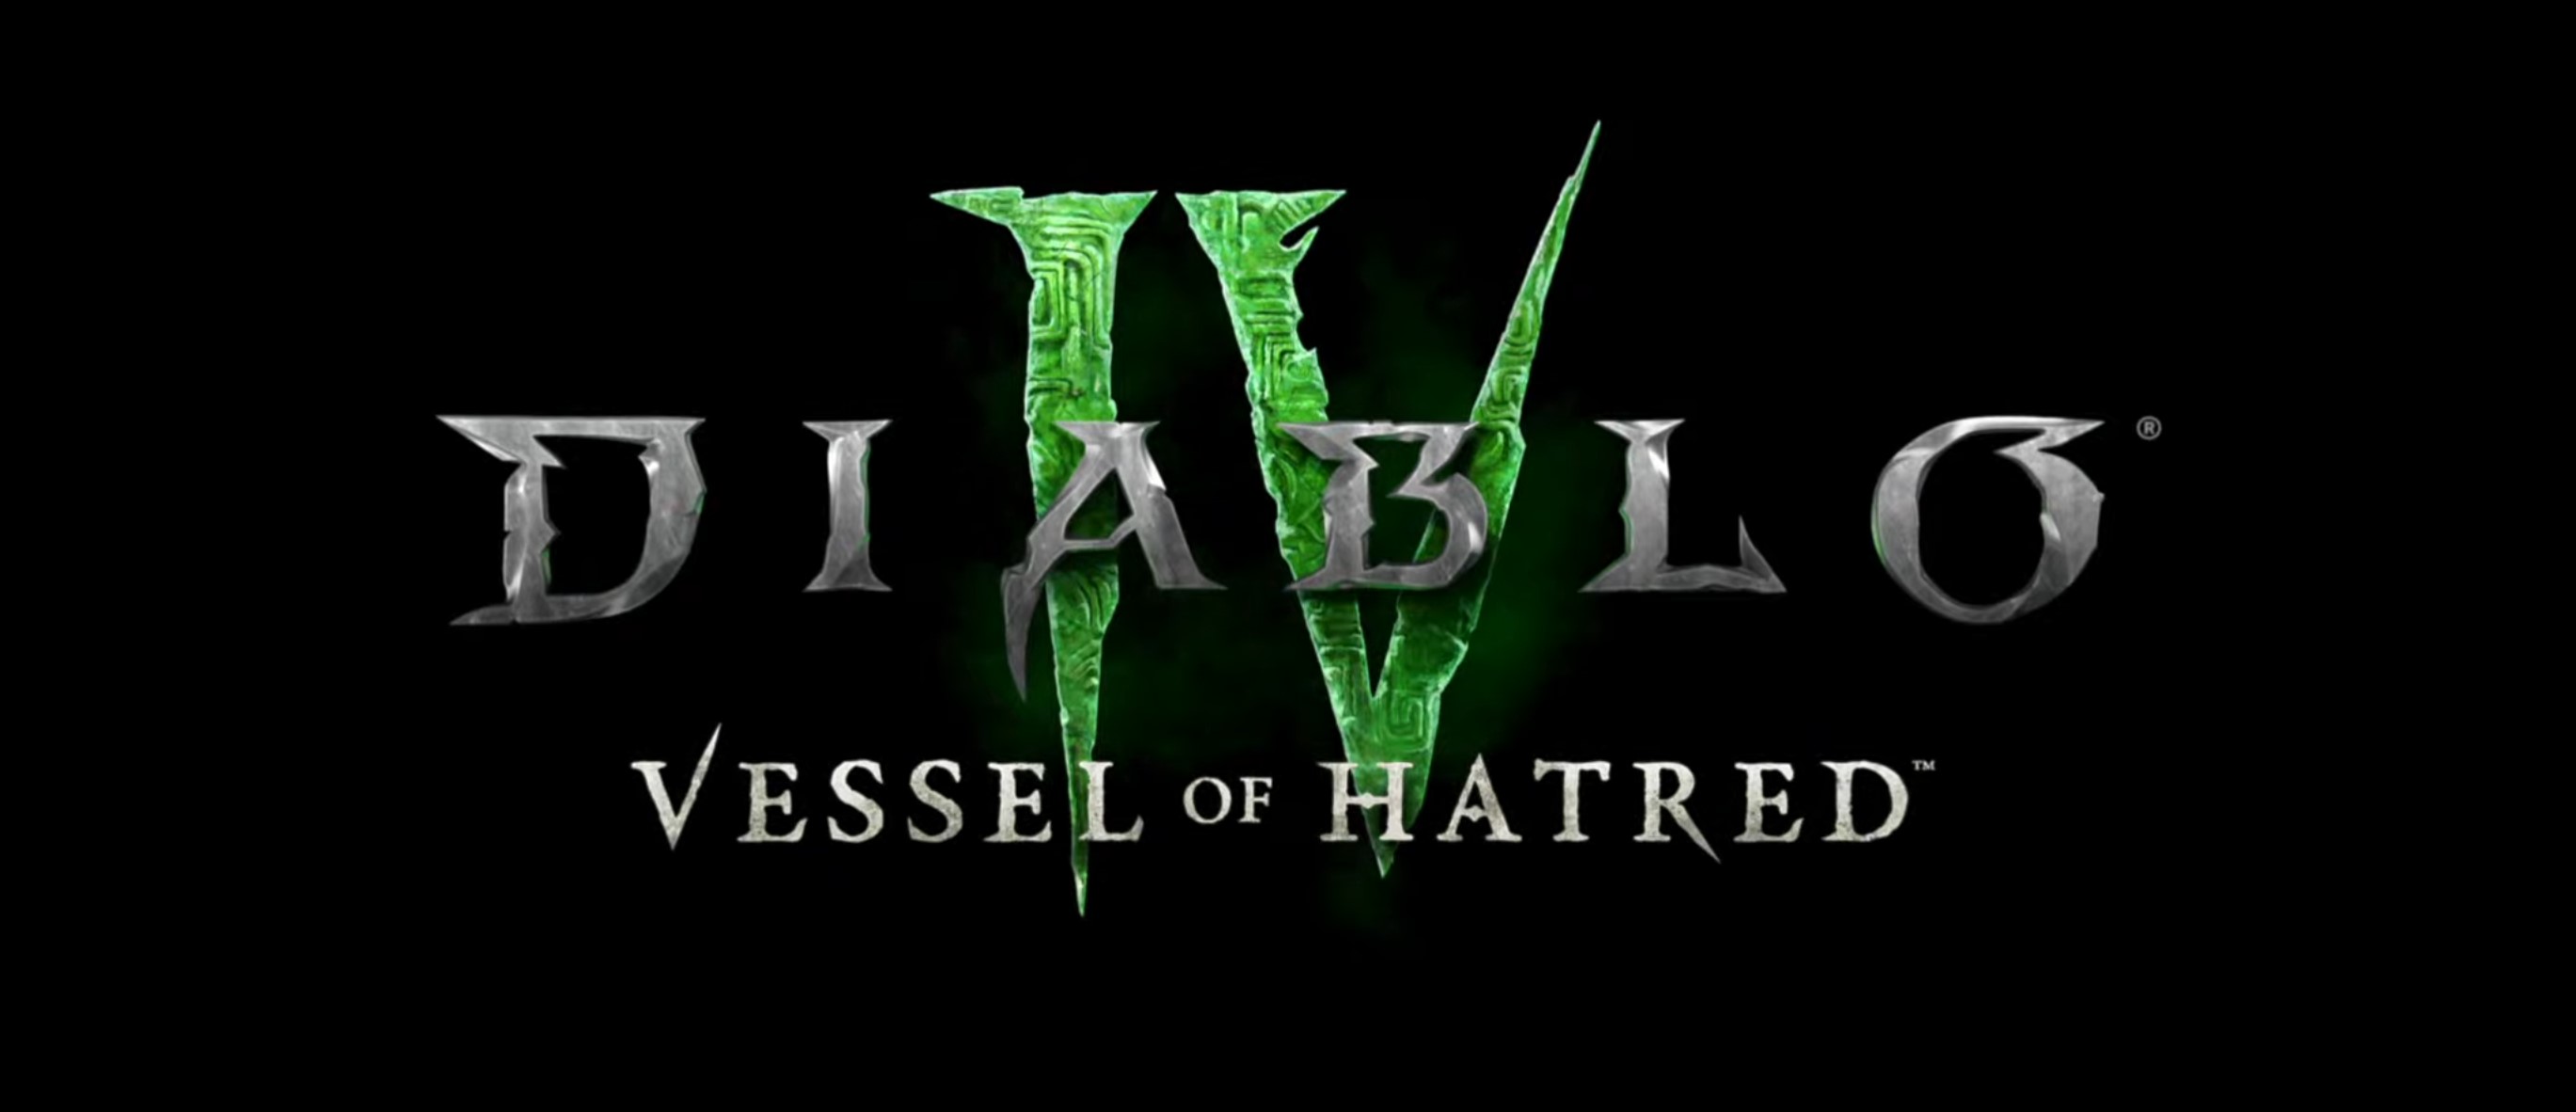 Diablo IV Vessel of Hatred